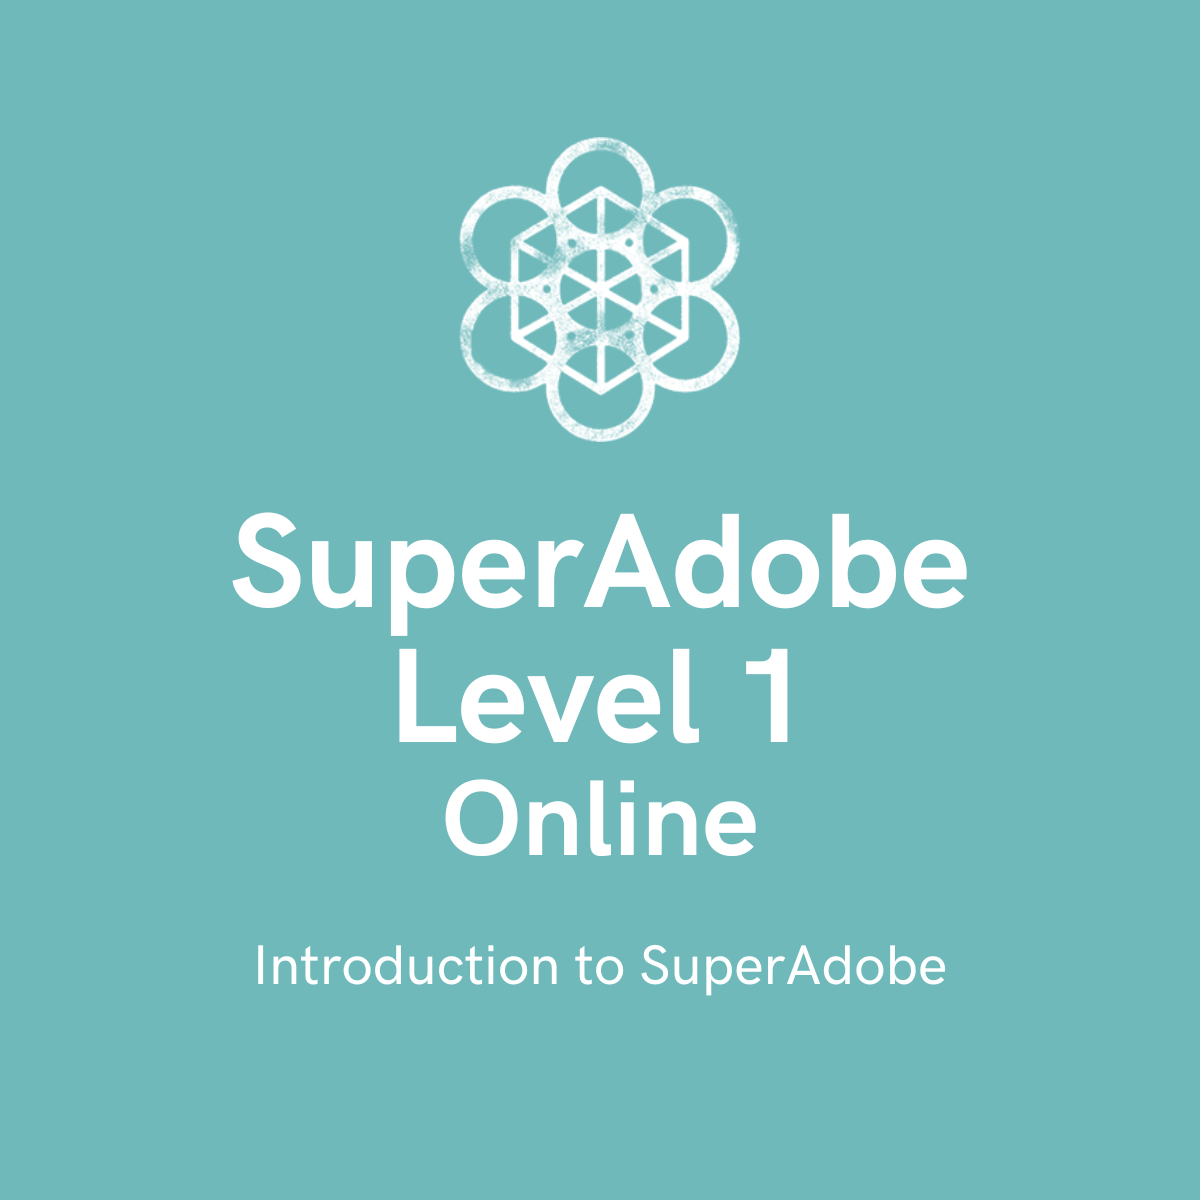 SuperAdobe Level 1 Online: Introduction to SuperAdobe